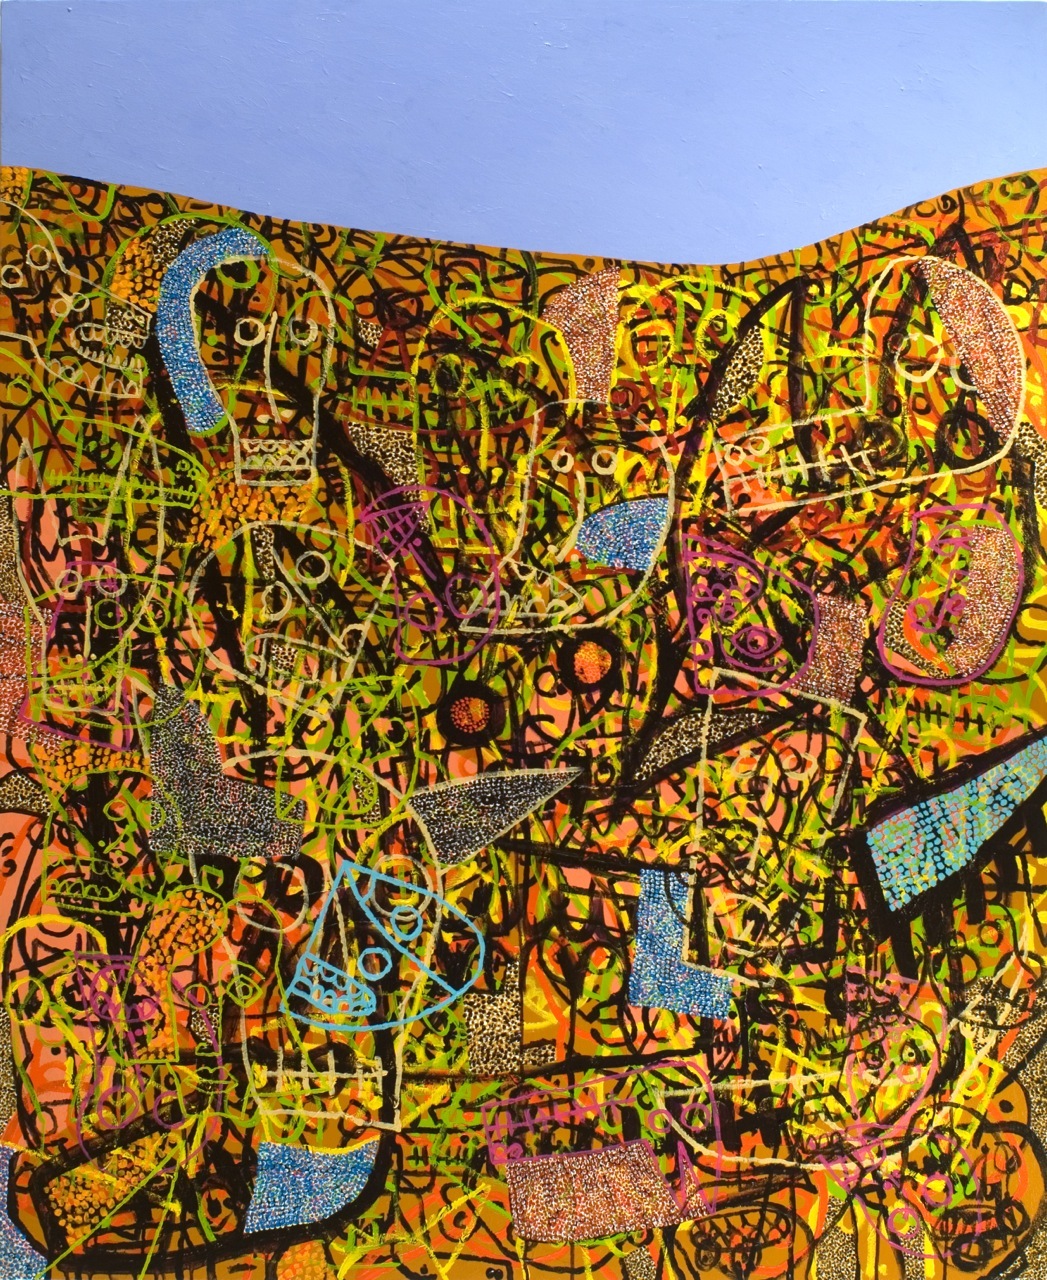 Zaragoza, center panel by Russ Warren at Les Yeux du Monde Art Gallery